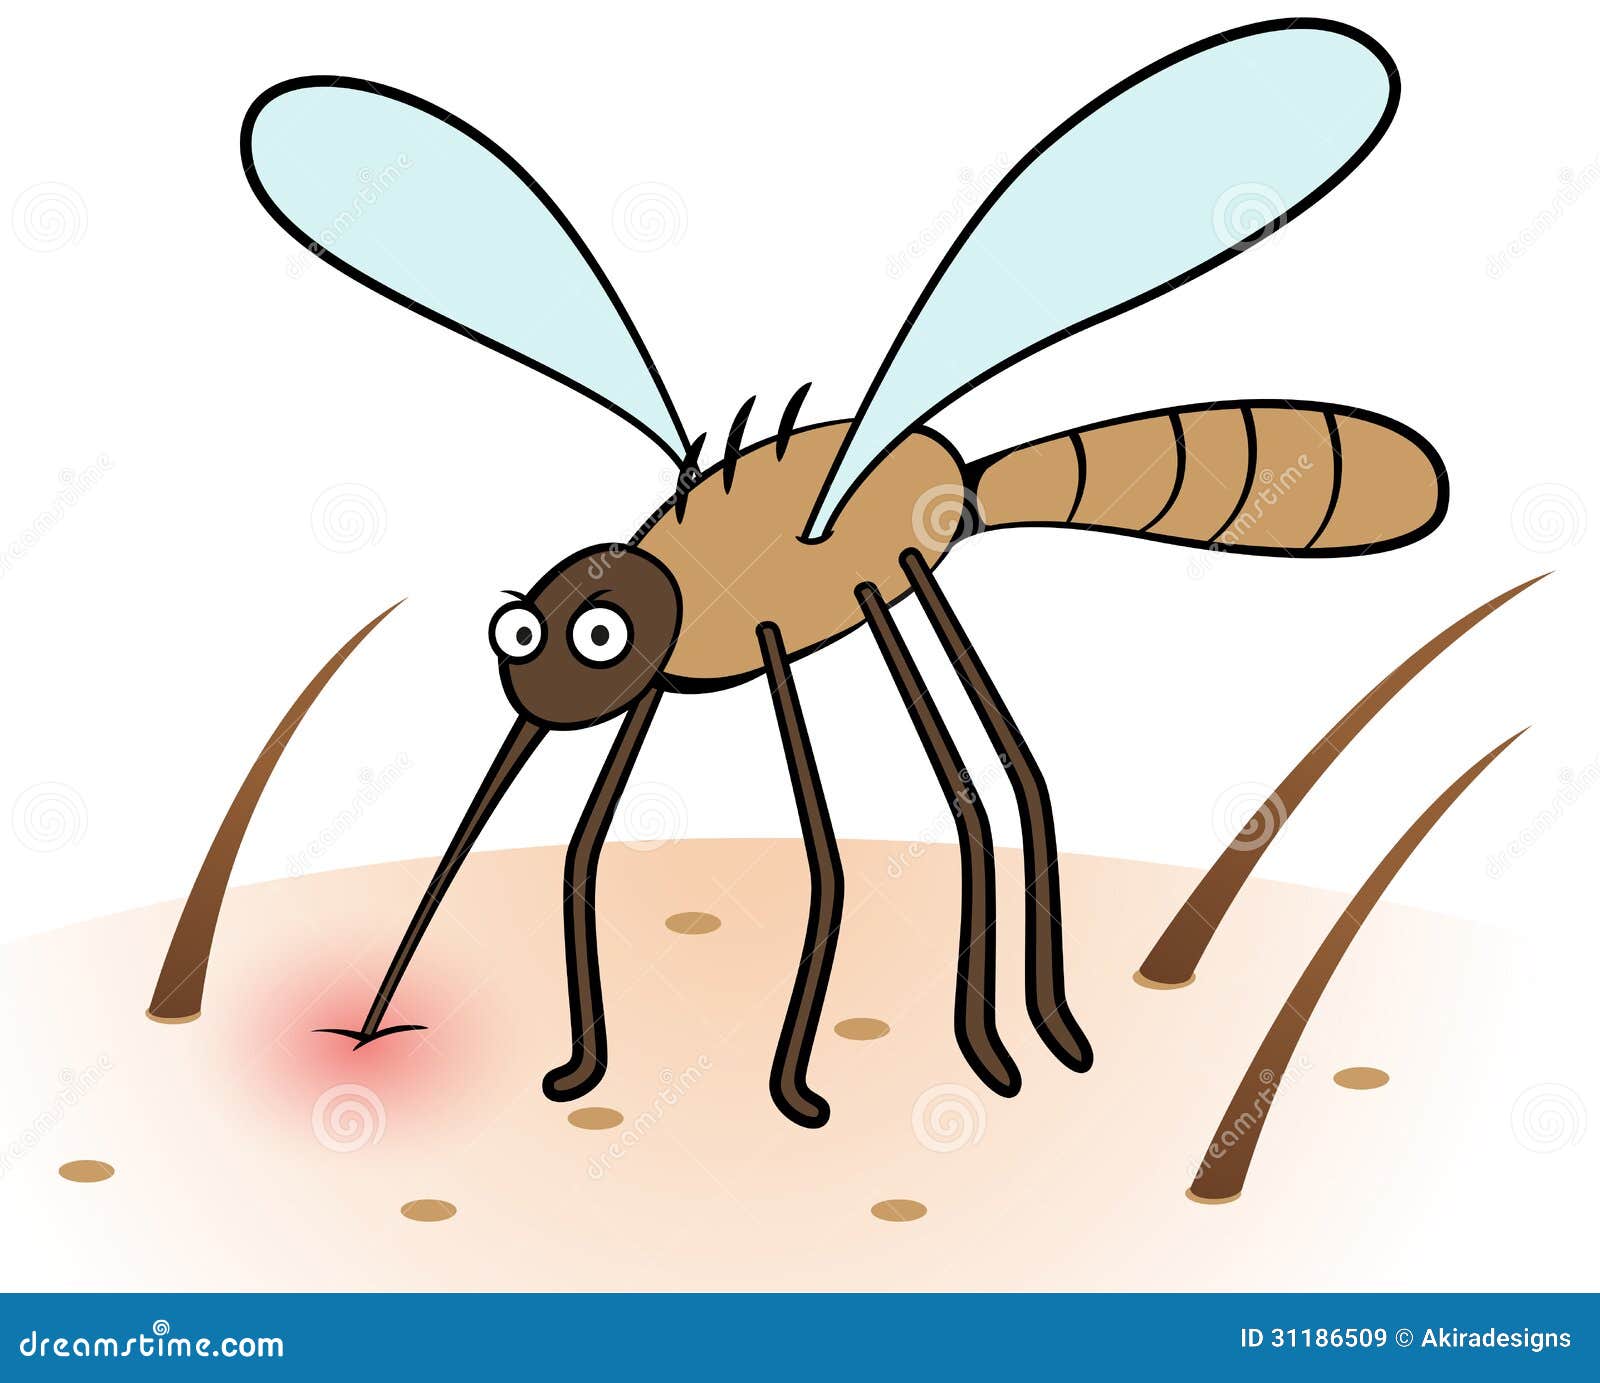 Mosquito sucking blood stock vector. Illustration of illness - 31186509